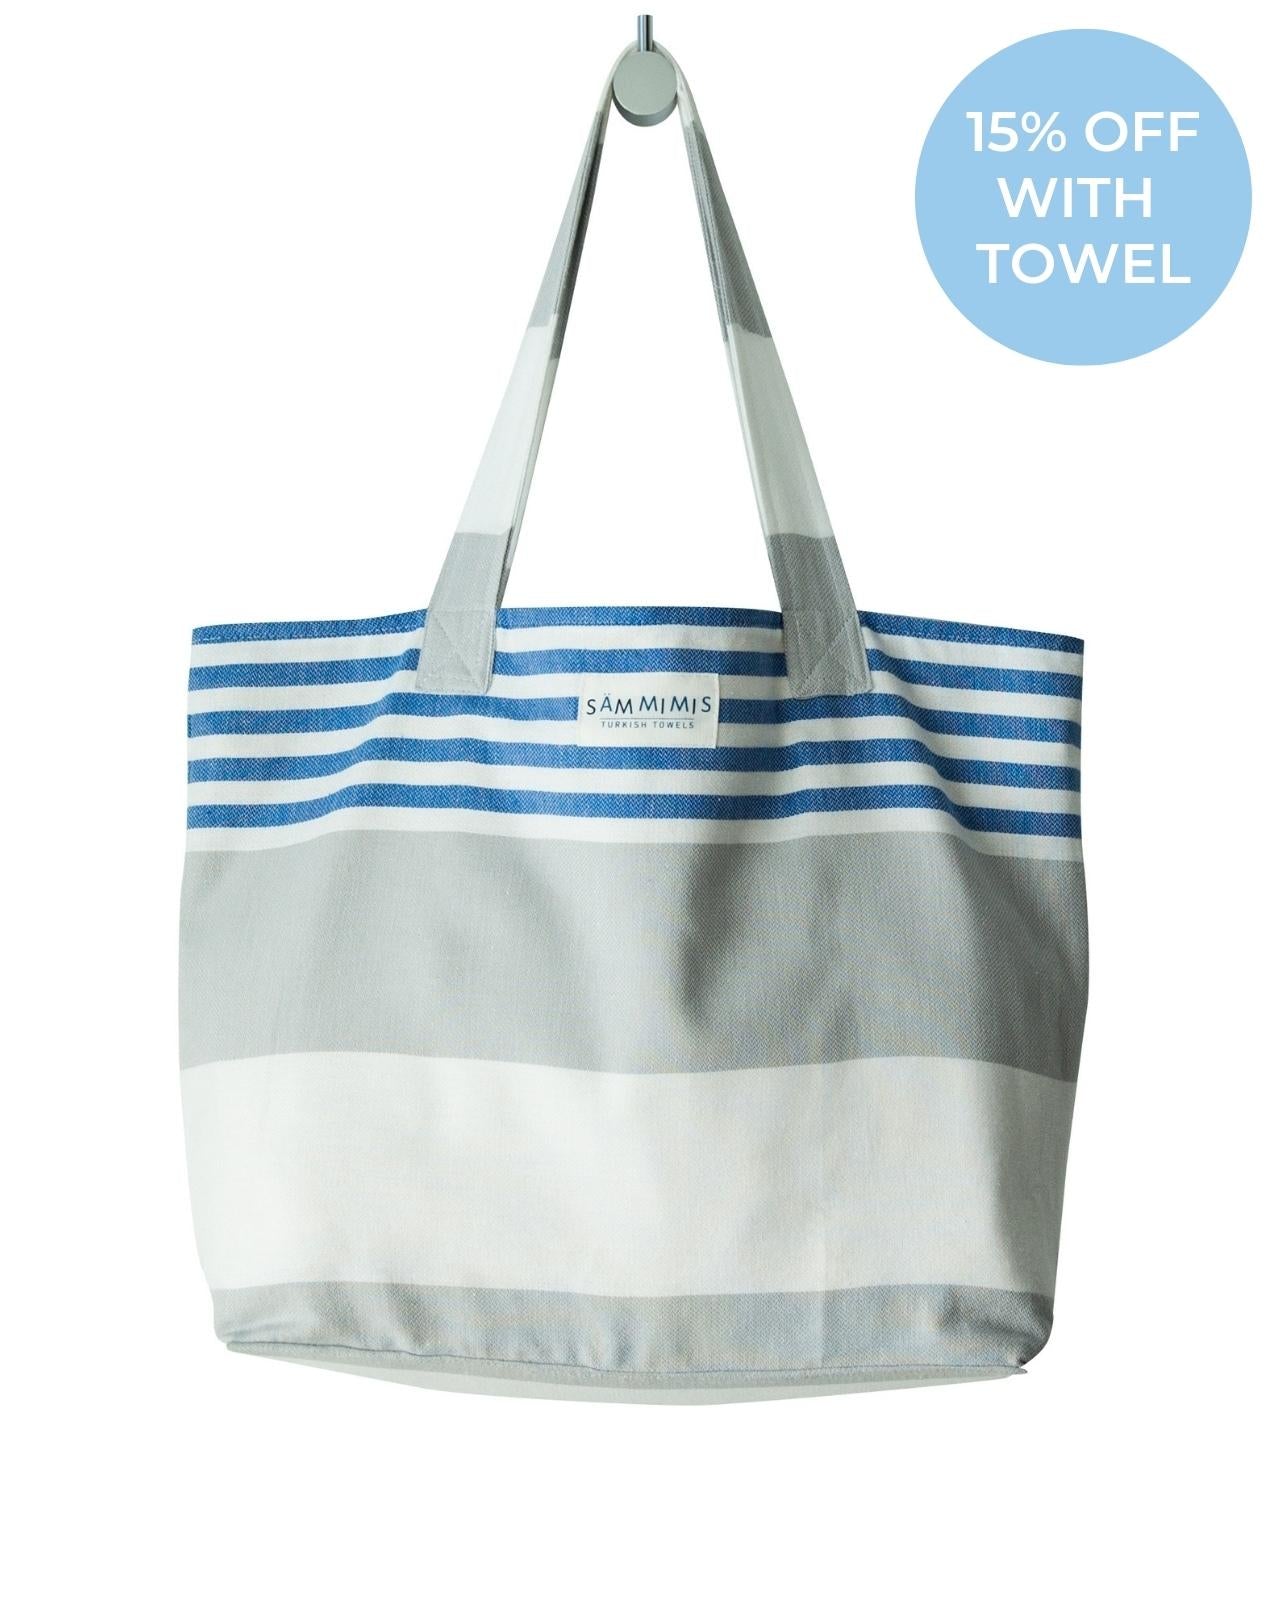 ST TROPEZ Beach Bag: Silver Grey/Royal Blue